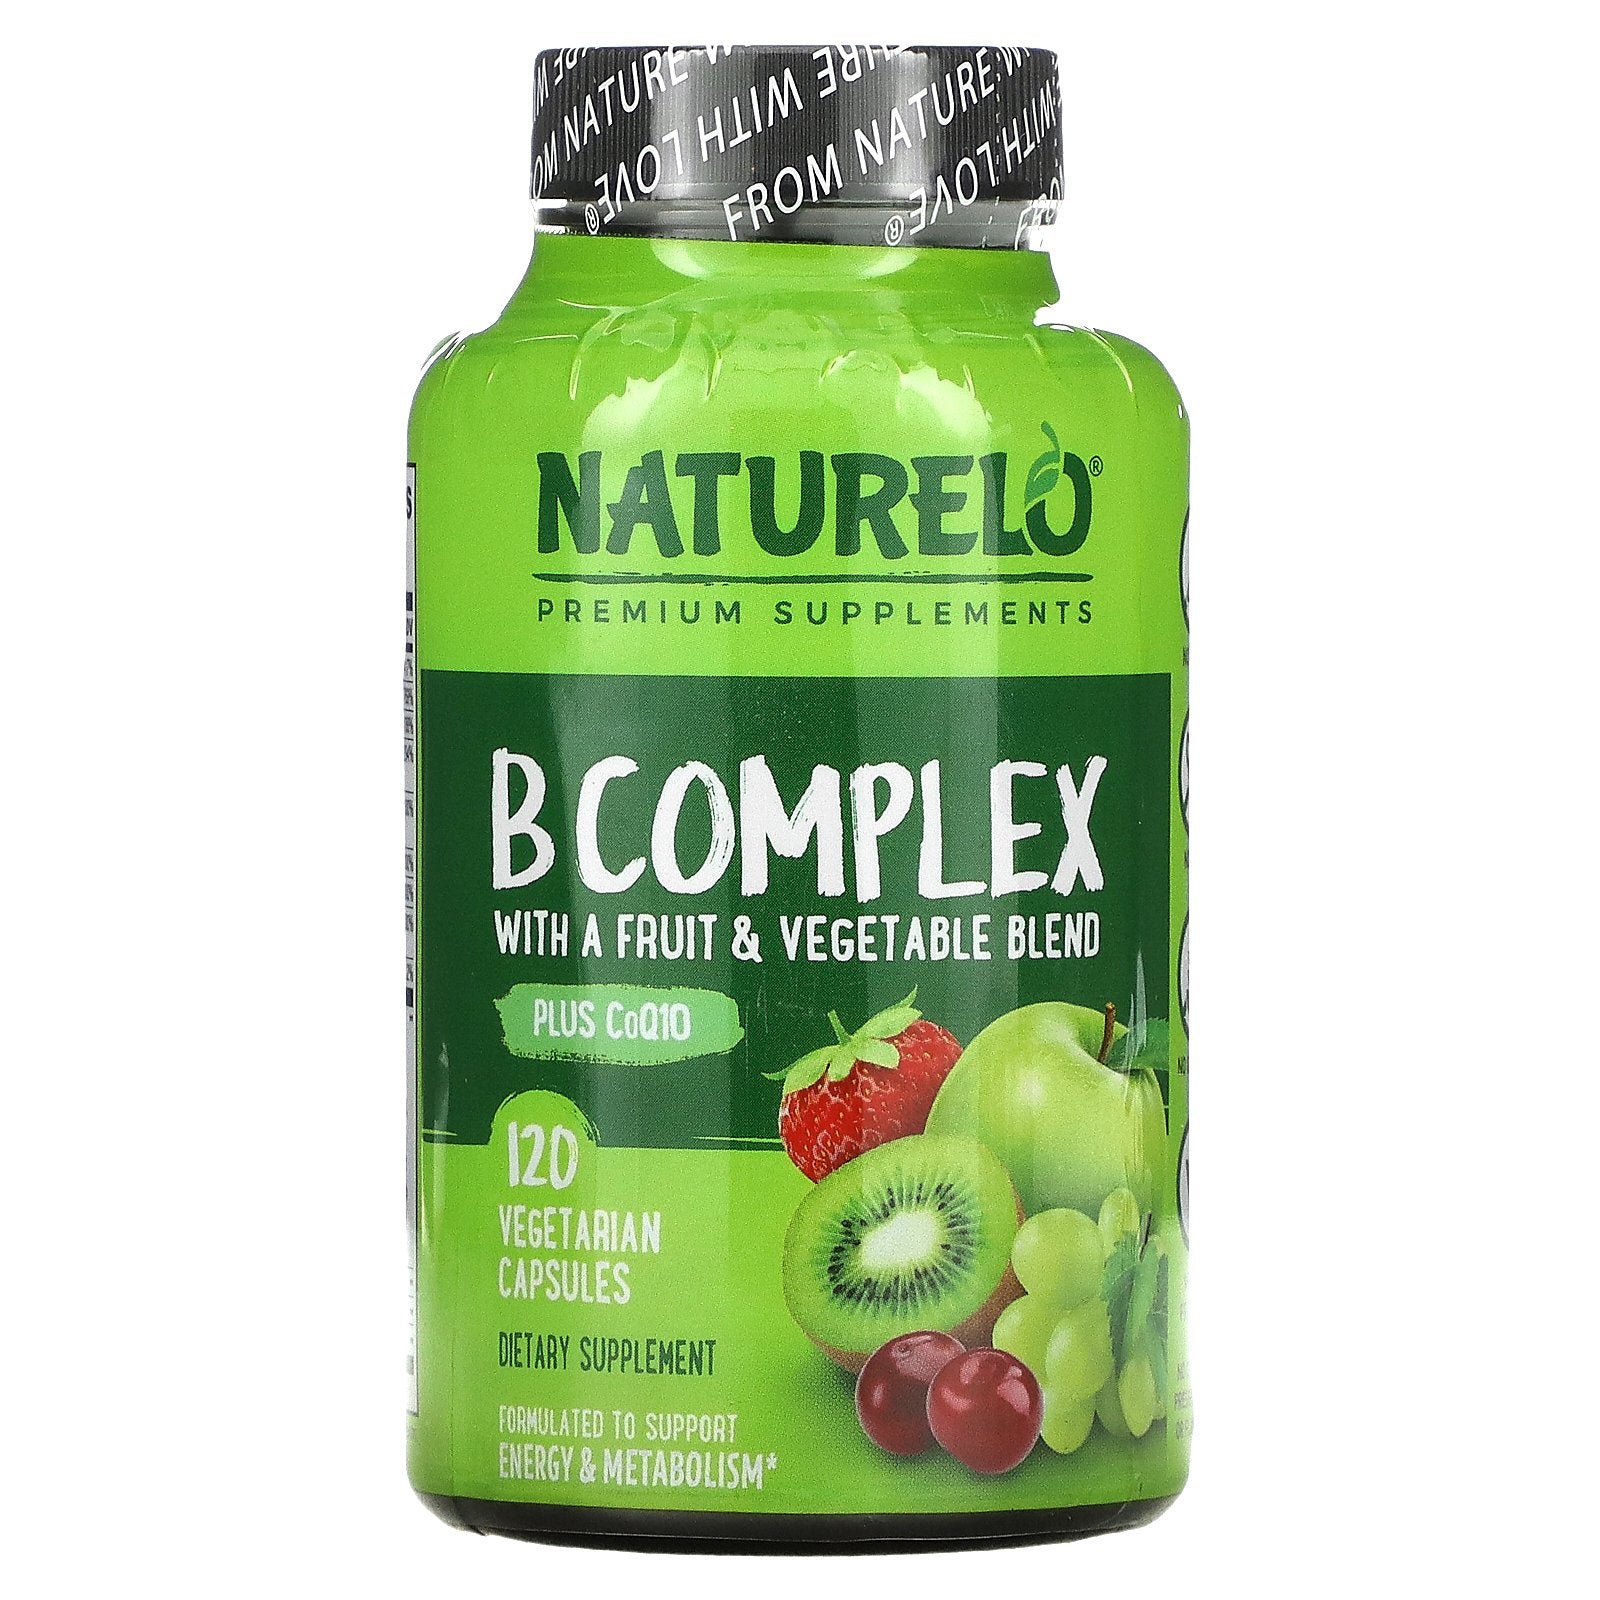 NATURELO, B Complex with a Fruit & Vegetable Blend, Plus CoQ10, Vegetarian Capsules